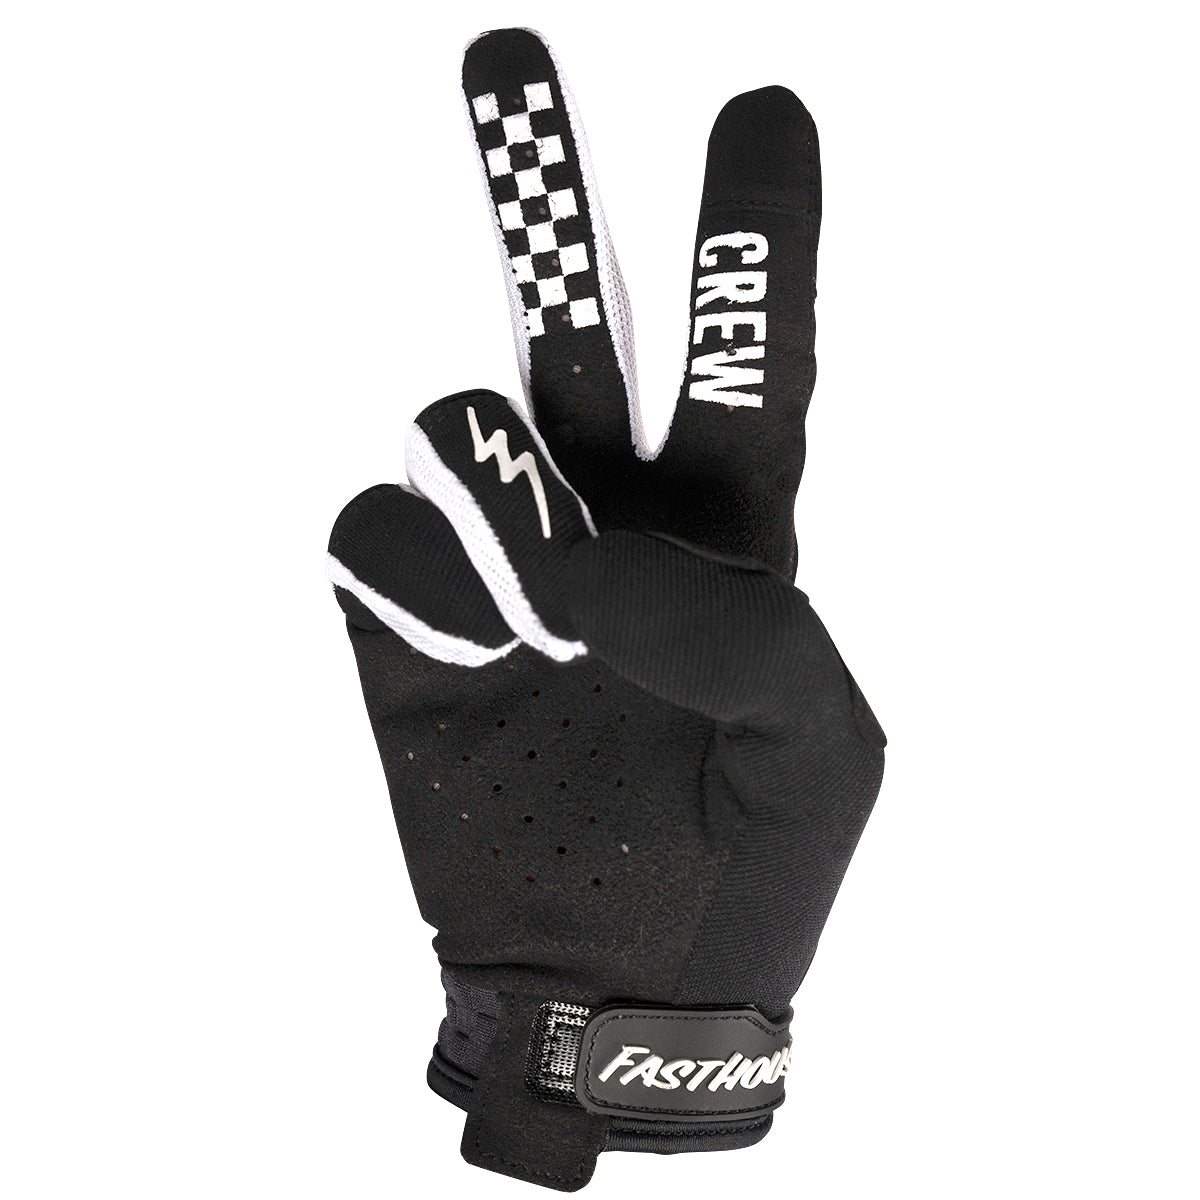 Hot Wheels Speed Style Glove - Black